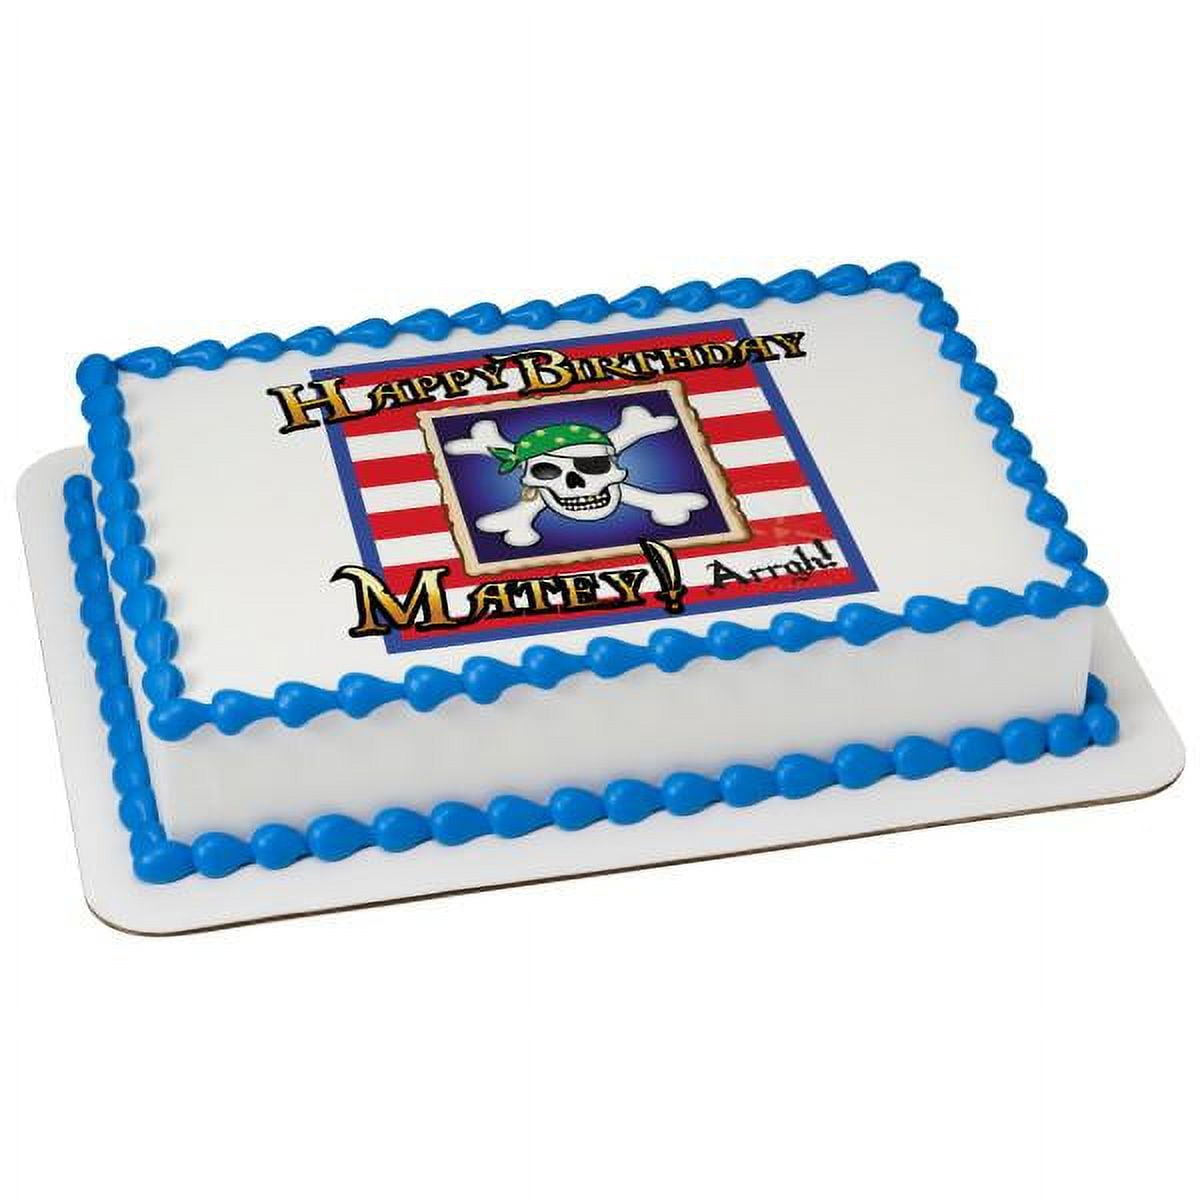 Titanic sinking fondant cake topper | Cake toppers, Cake, Fondant cake  topper